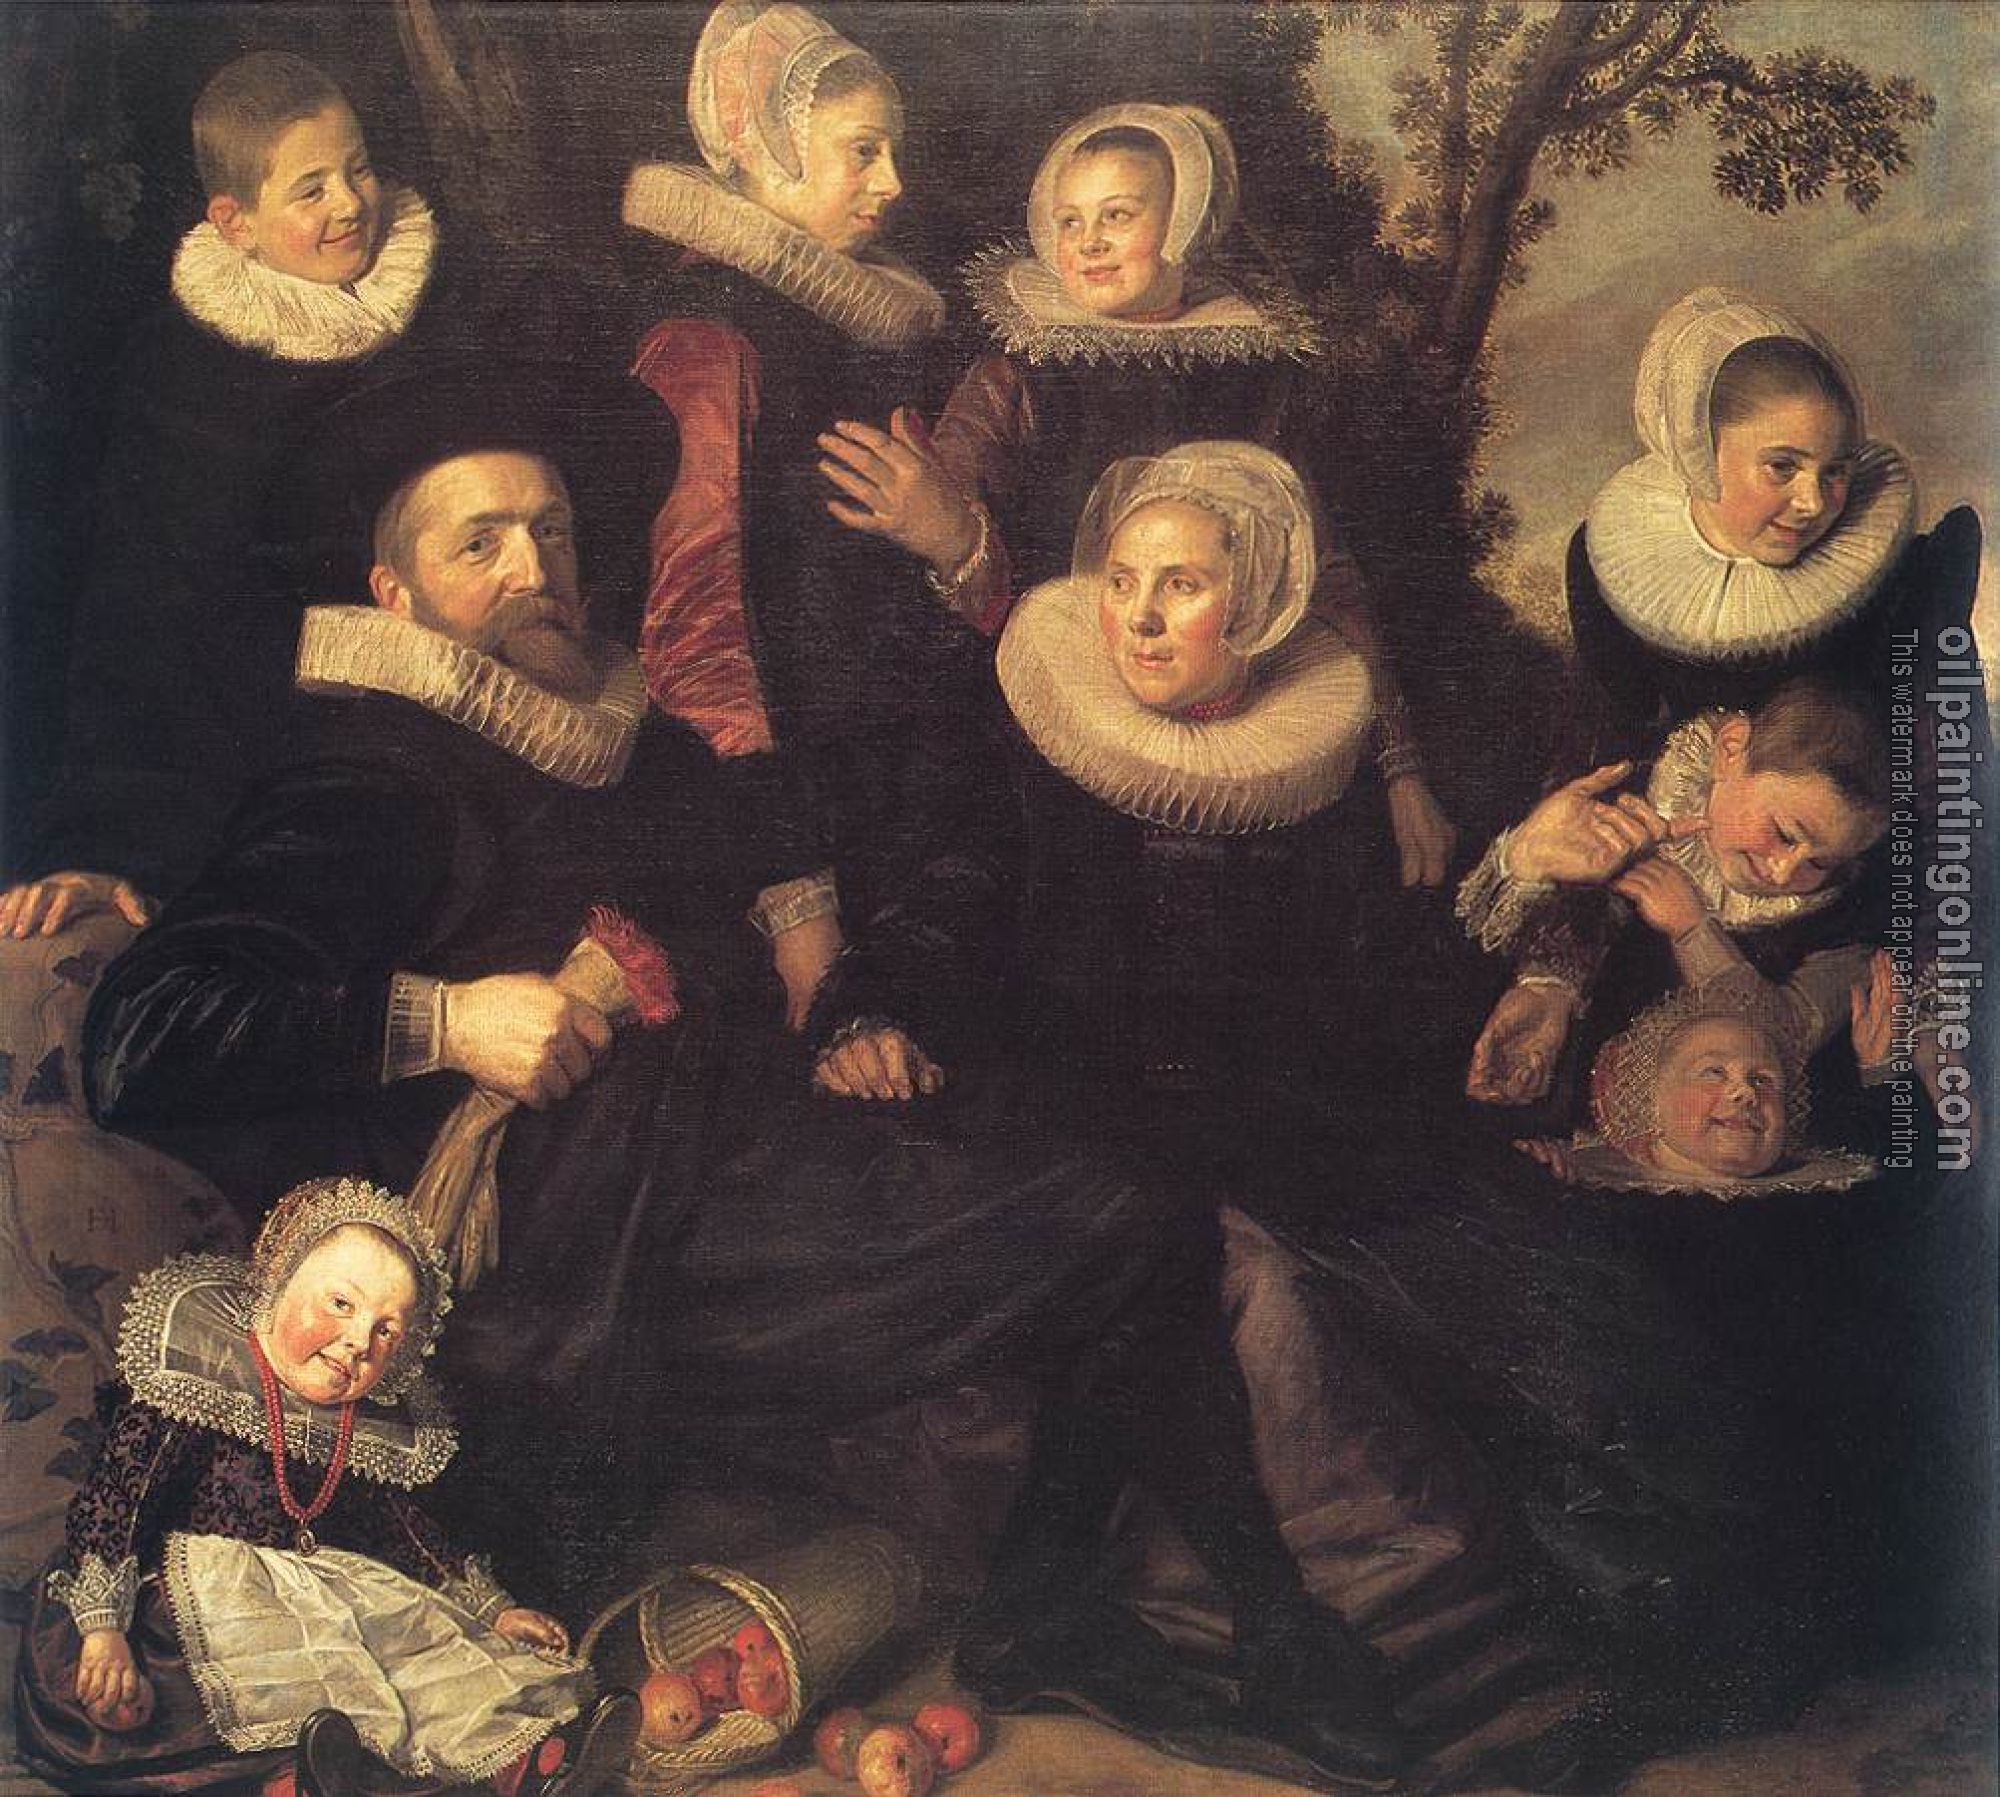 Hals, Frans - Family Portrait in a Landscape